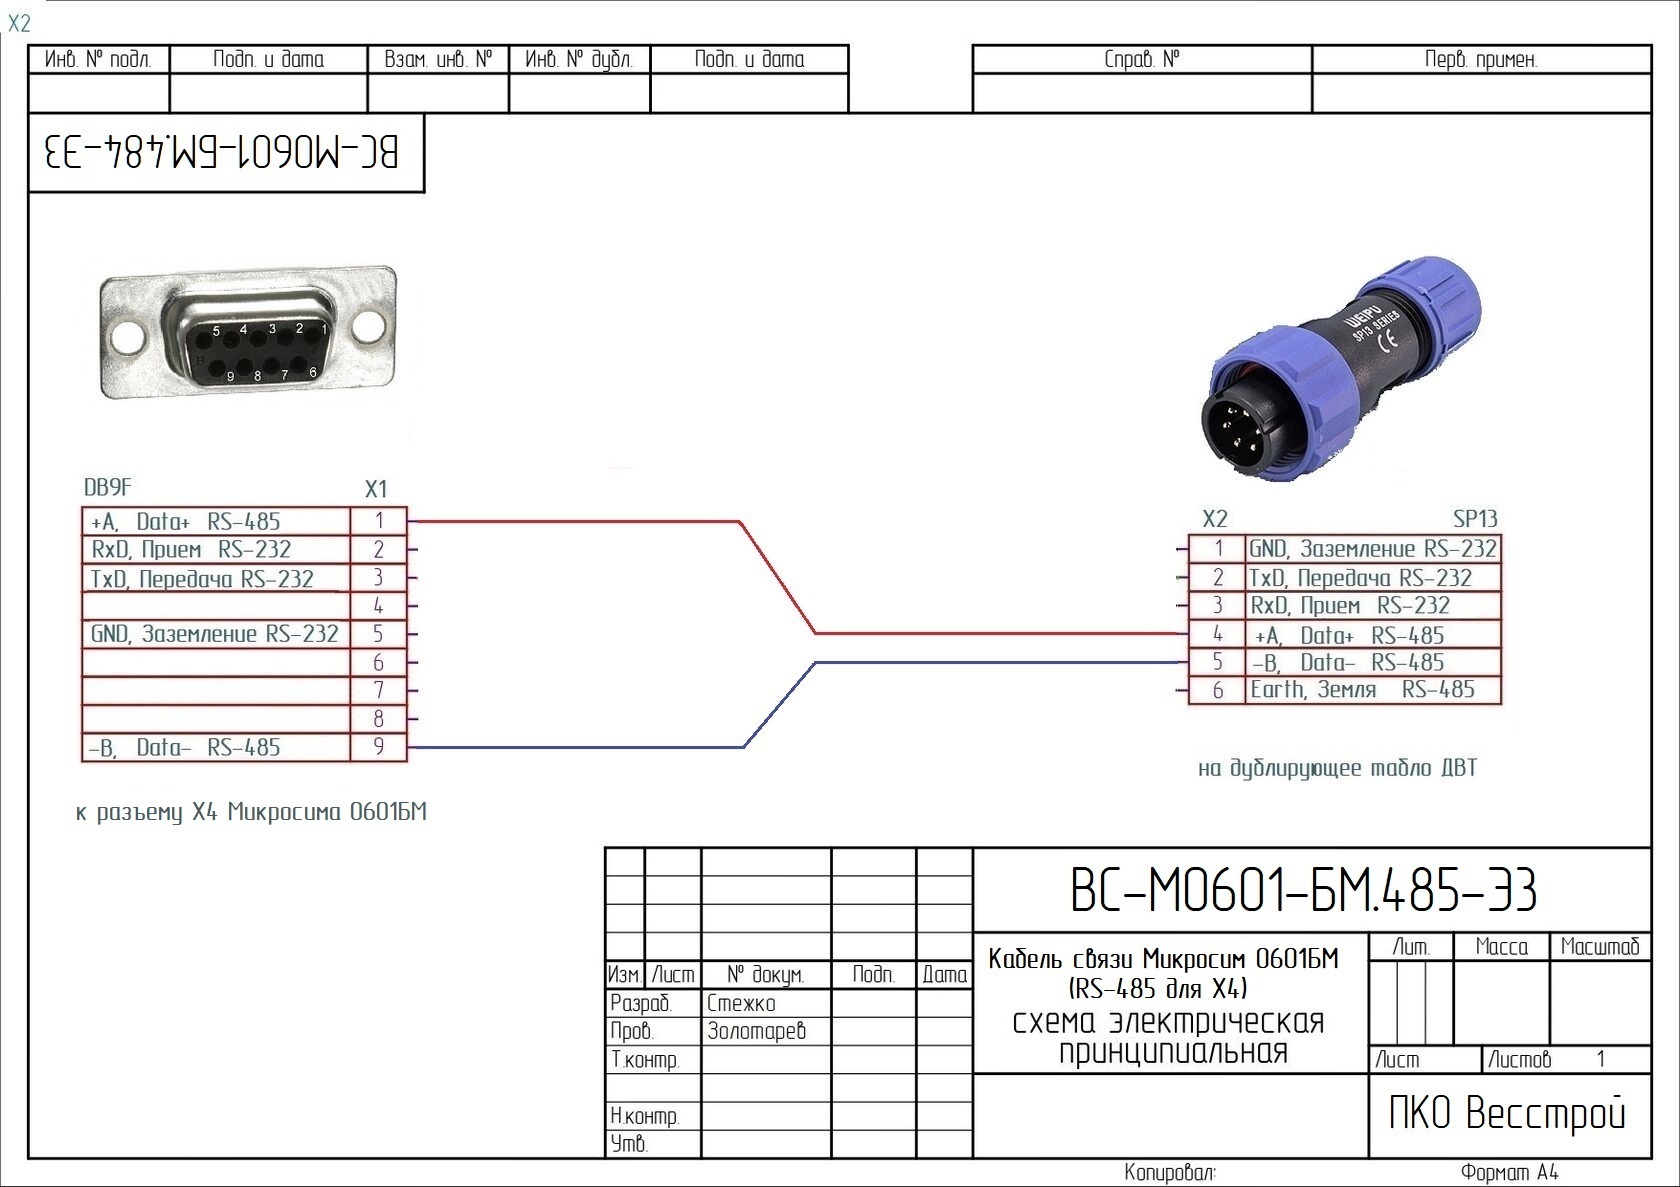  Схема кабеля связи Микросим 0601БМ Х4 с дублирующим индикатором